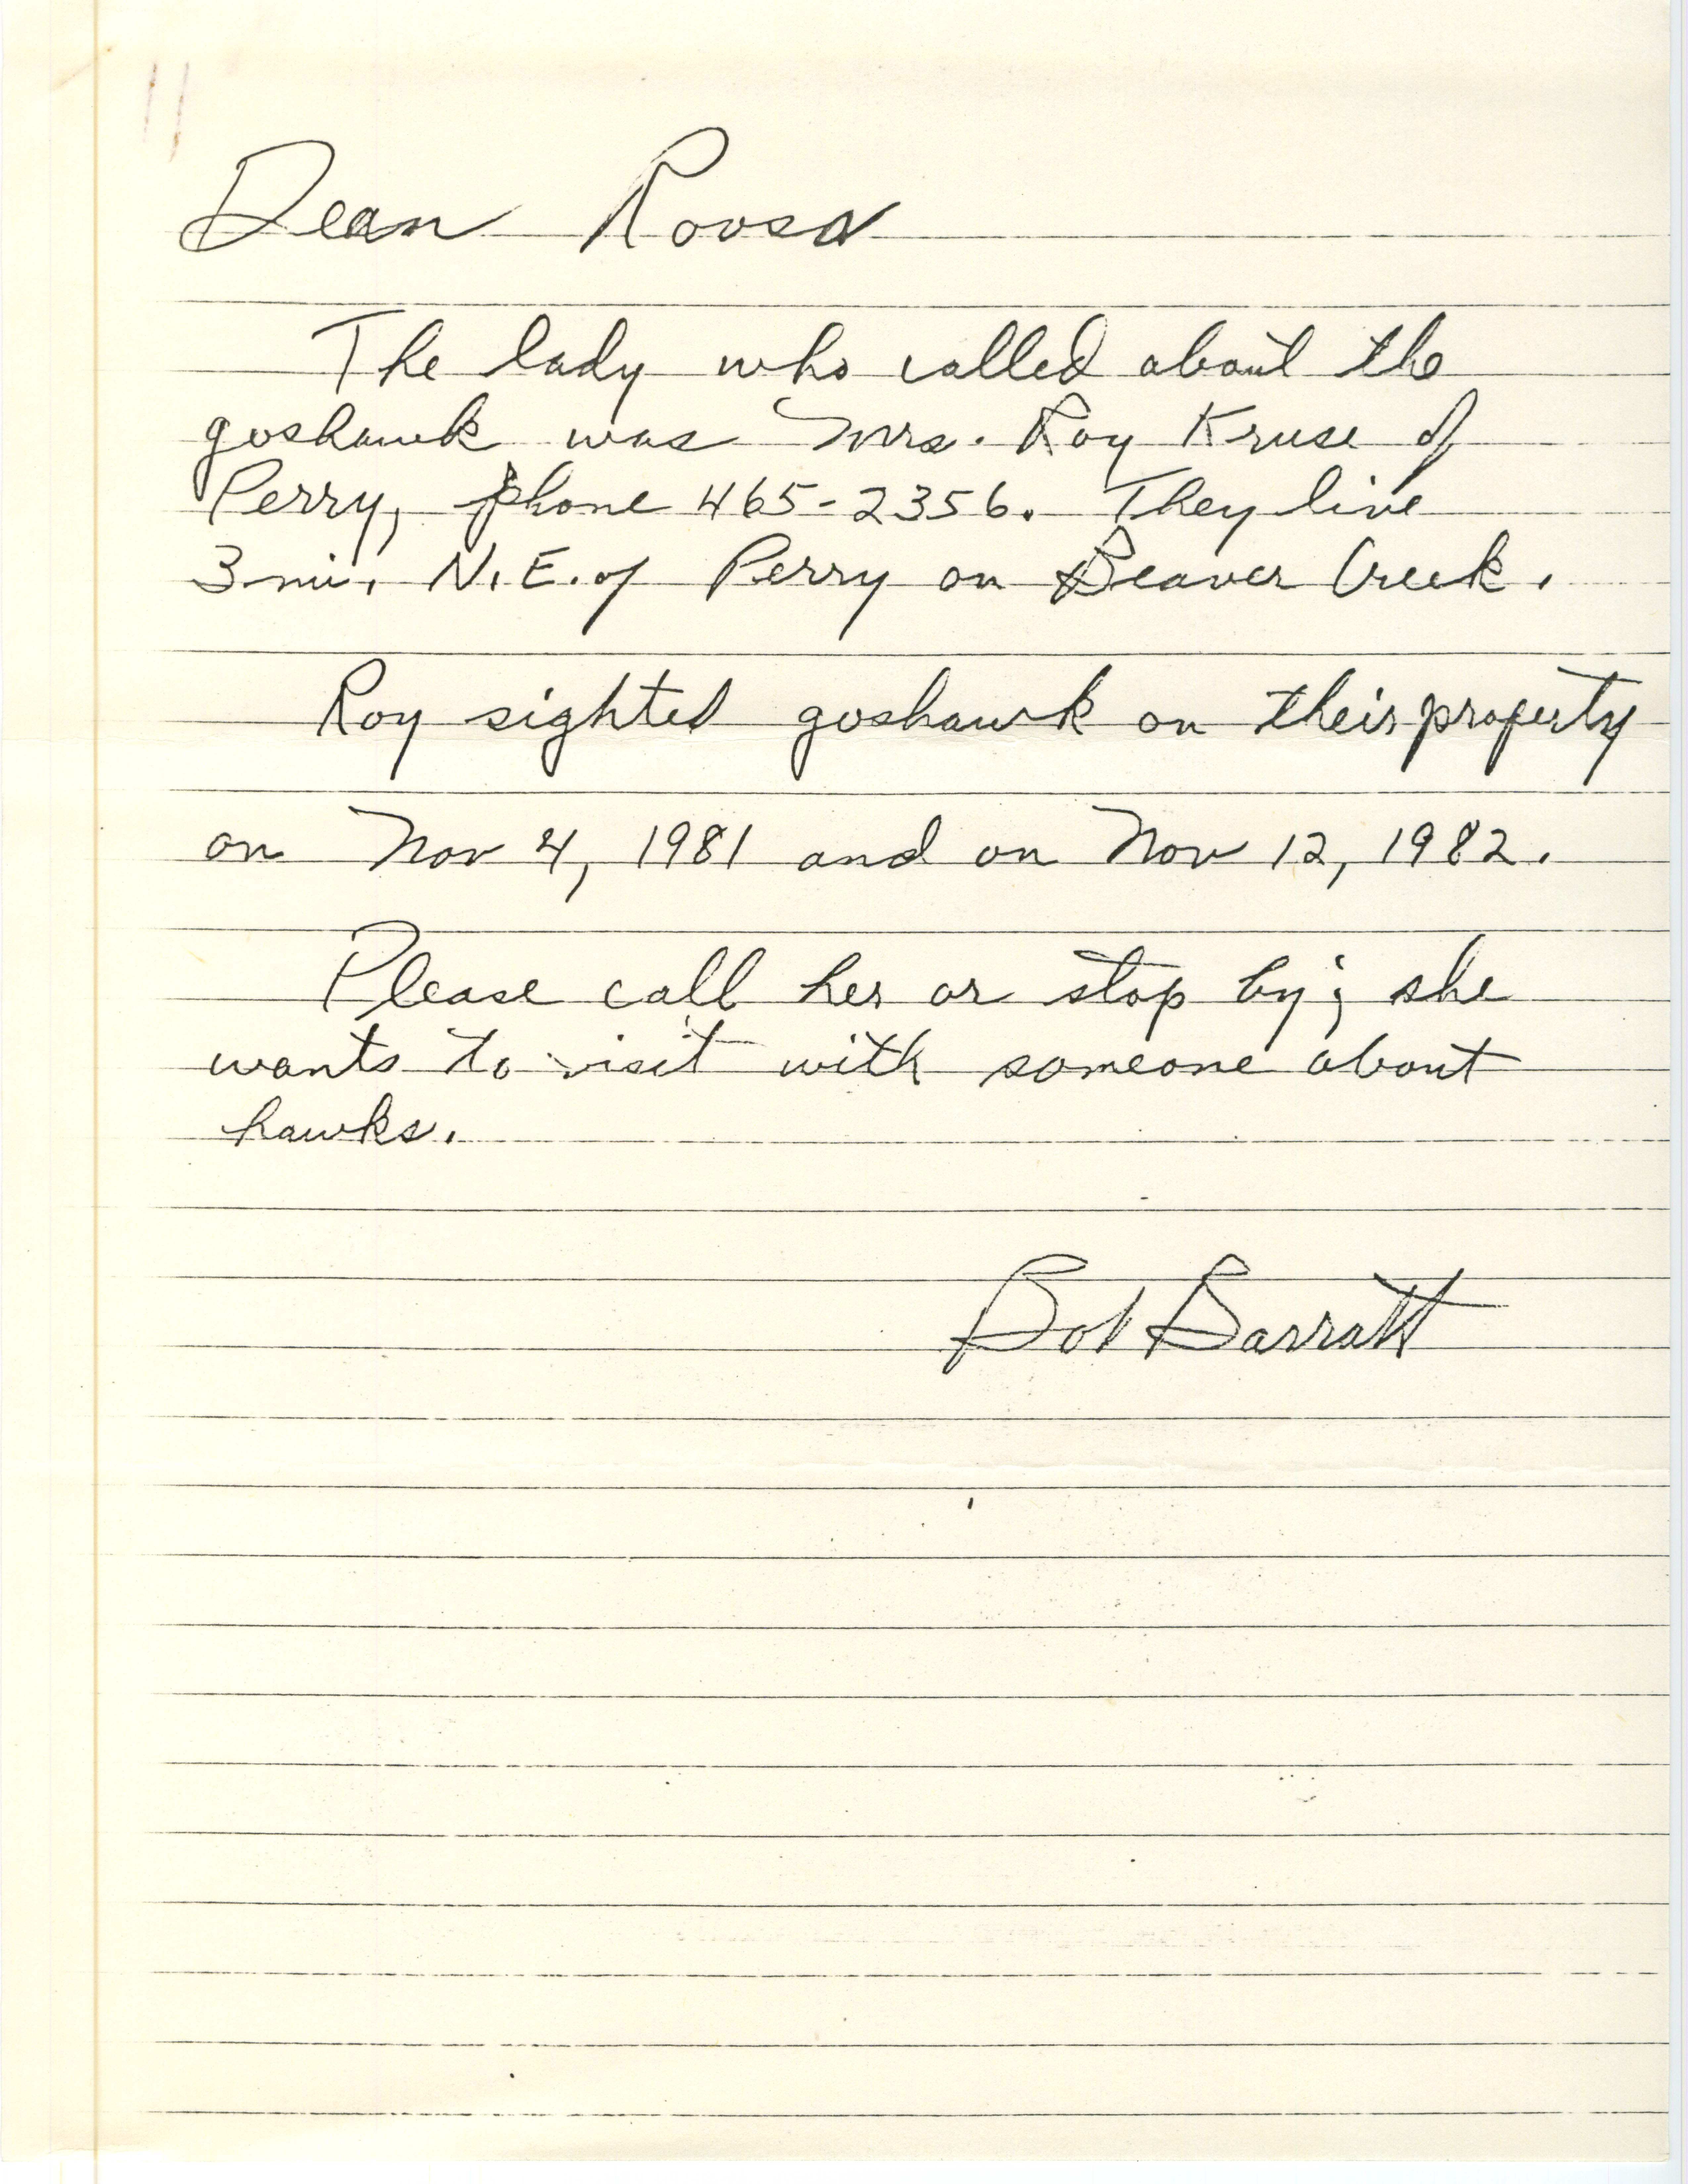 Bob Barratt letter to Dean M. Roosa regarding a Goshawk sighting, fall 1982